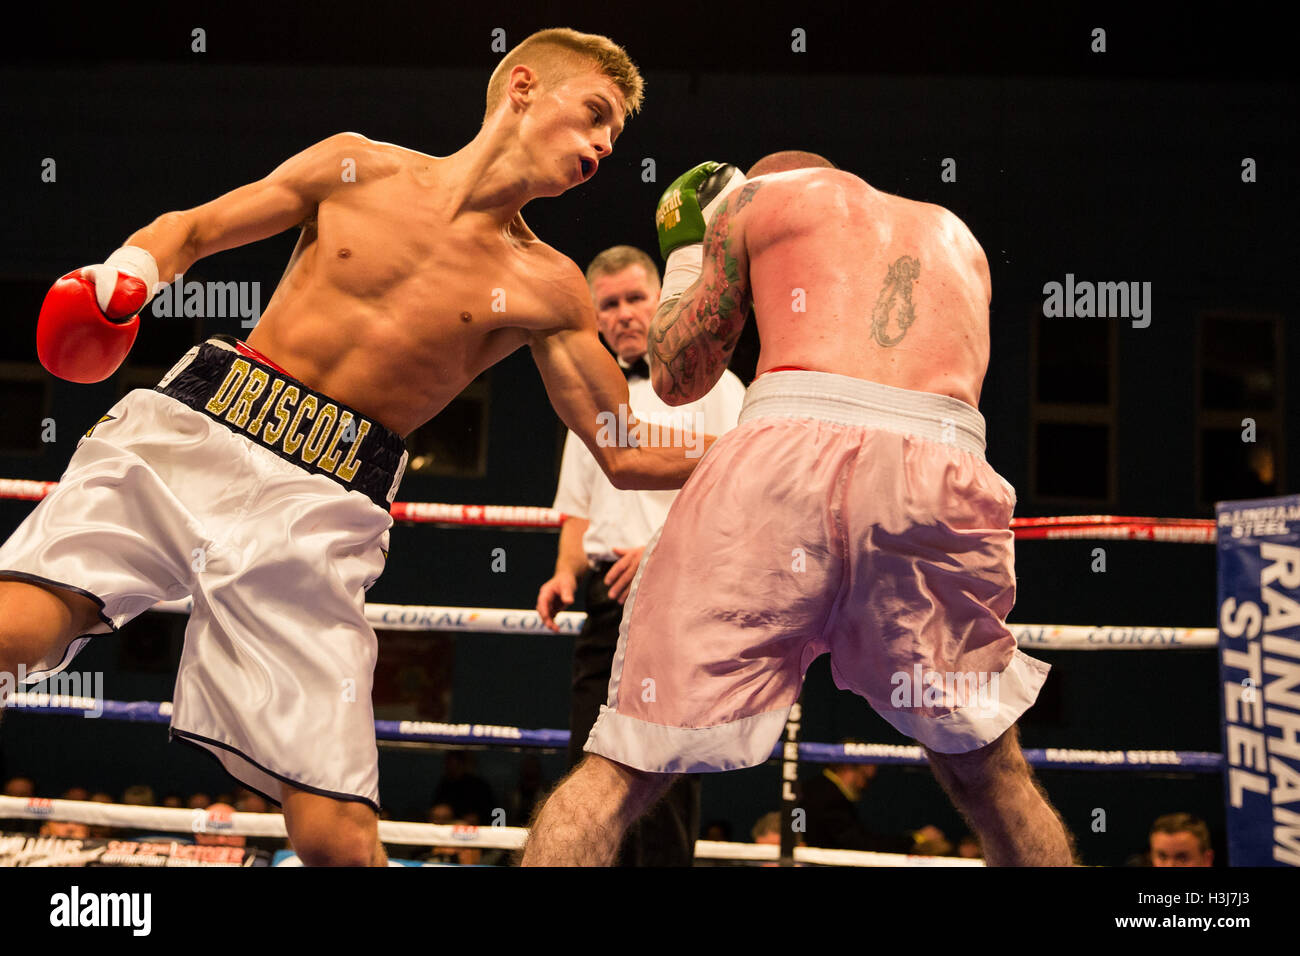 Charlie Driscoll in a boxing fight with Matt Seawright Stock Photo